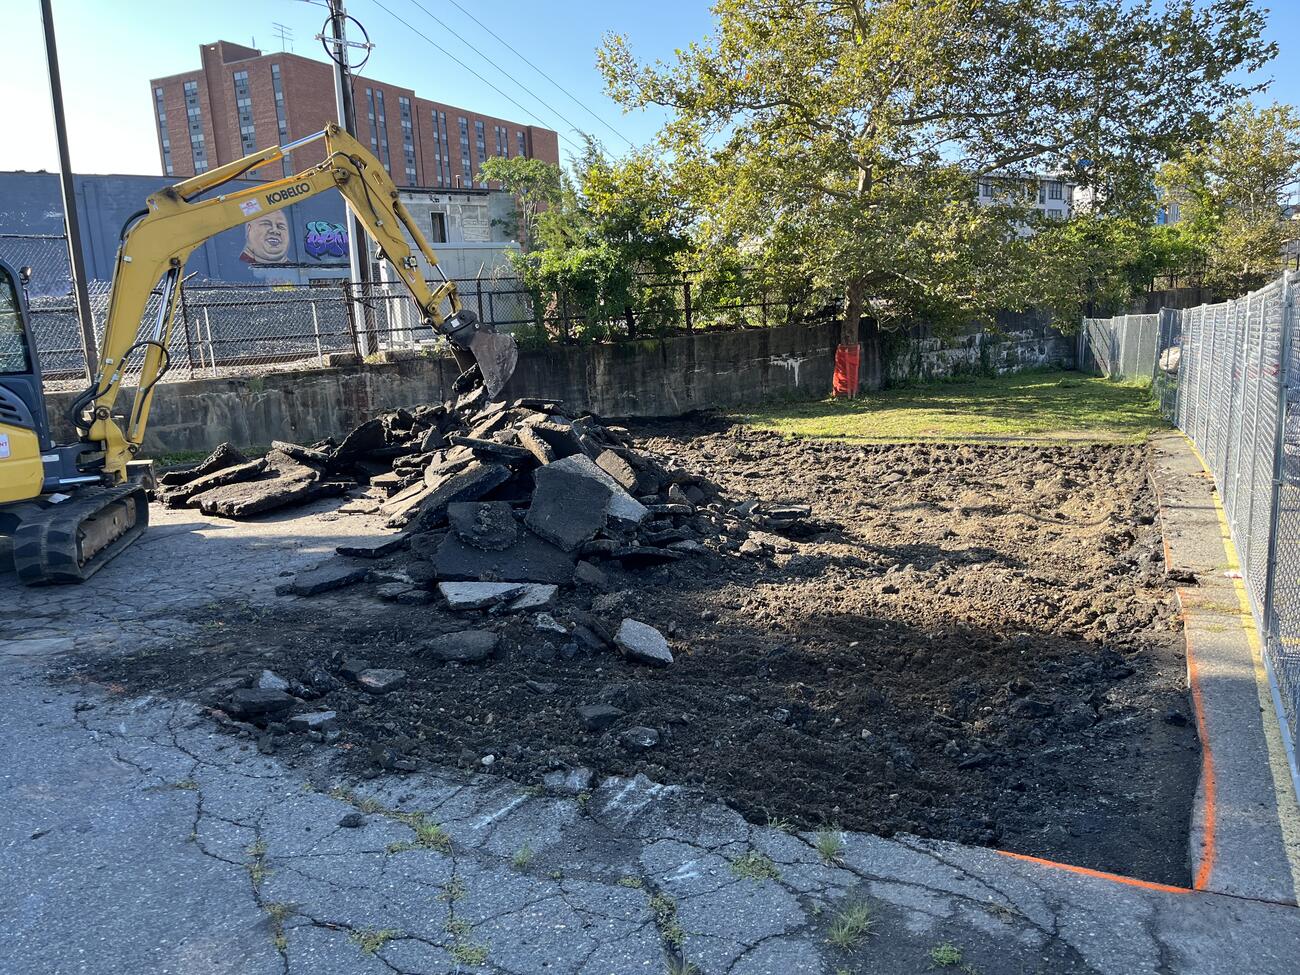 An excavator tearing up asphalt to reveal dirt underneath